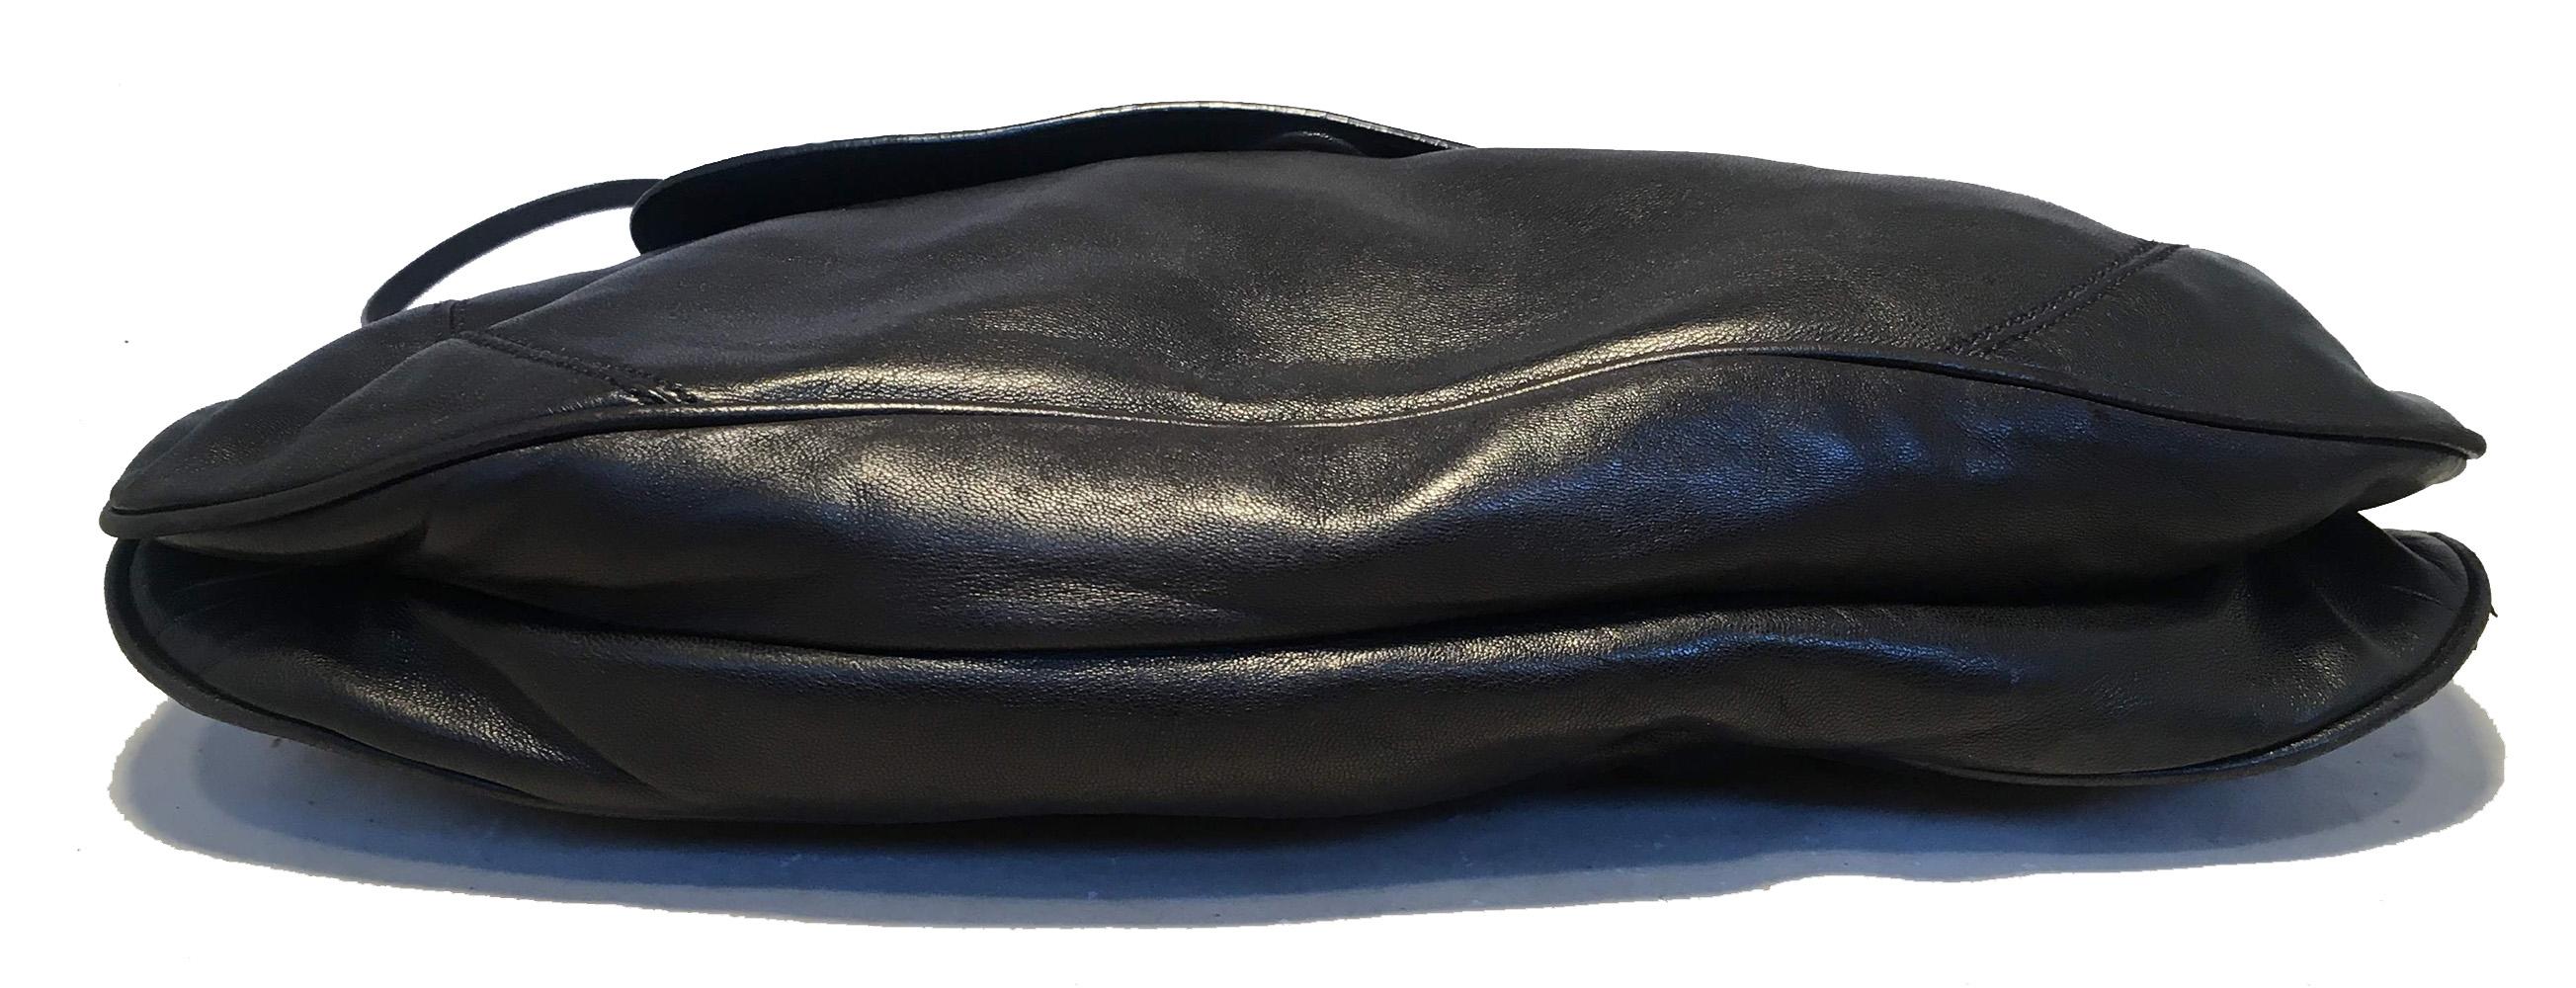 prada bag with wooden handle